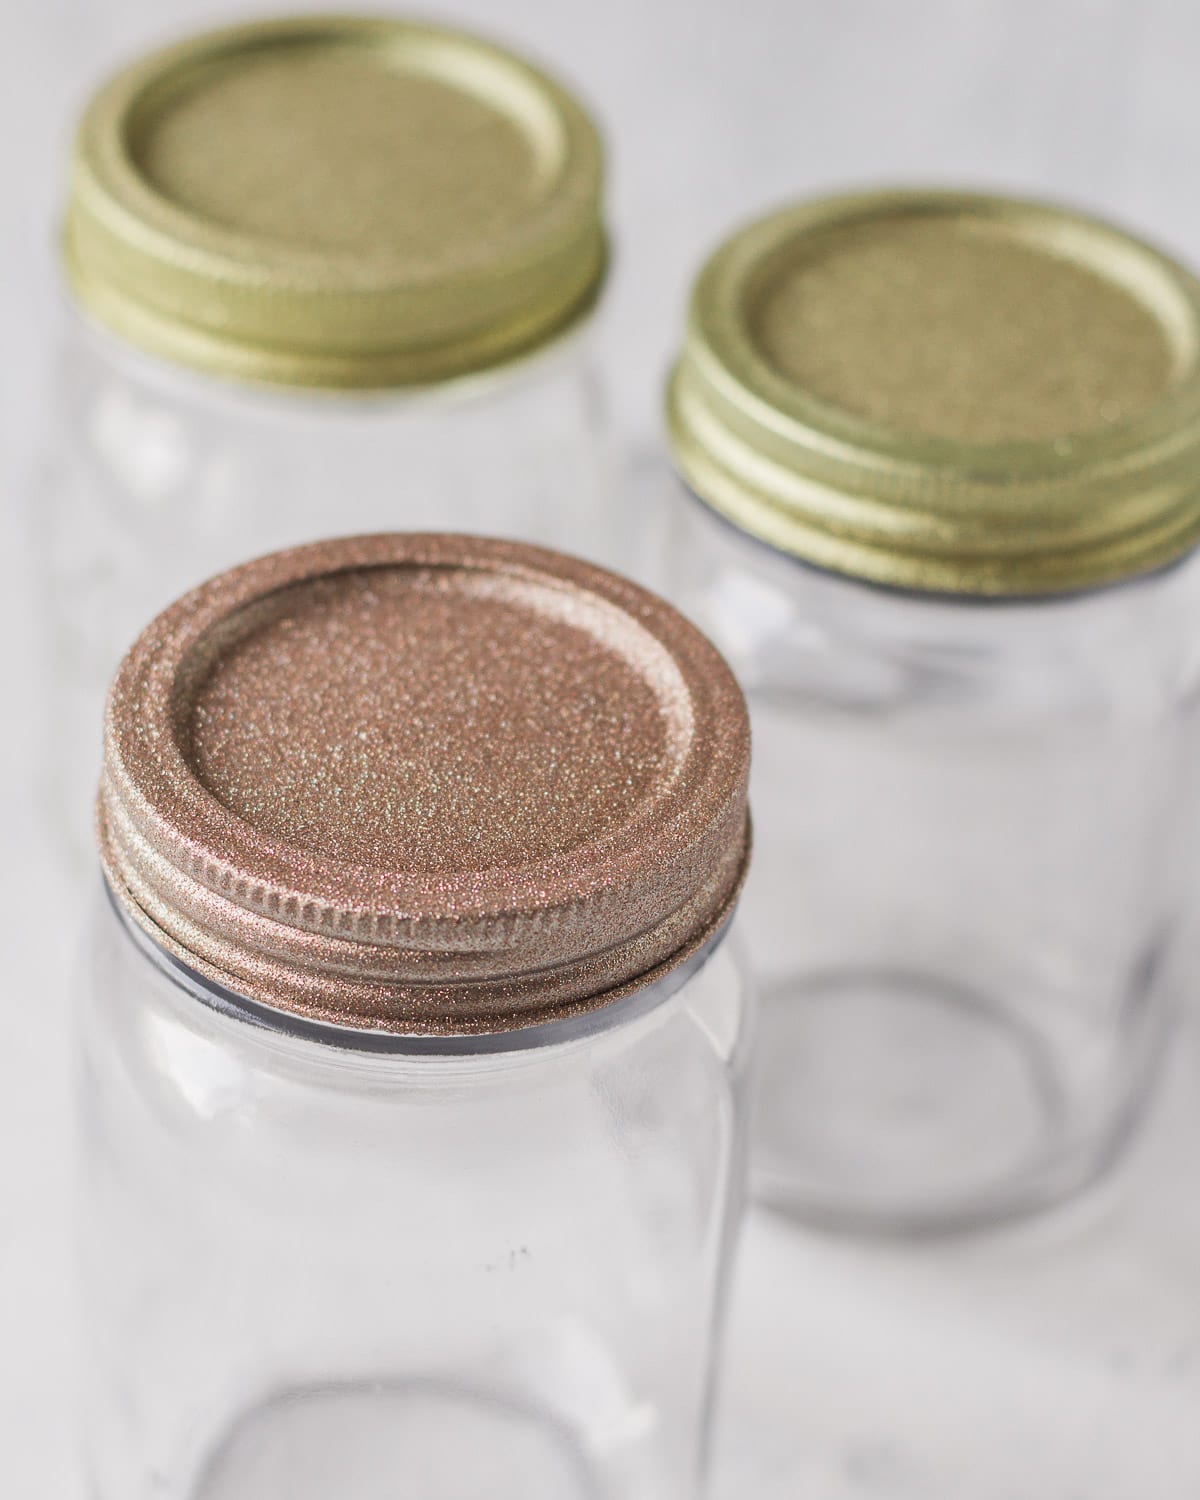 How to Make Glitter Lids for Mason Jars